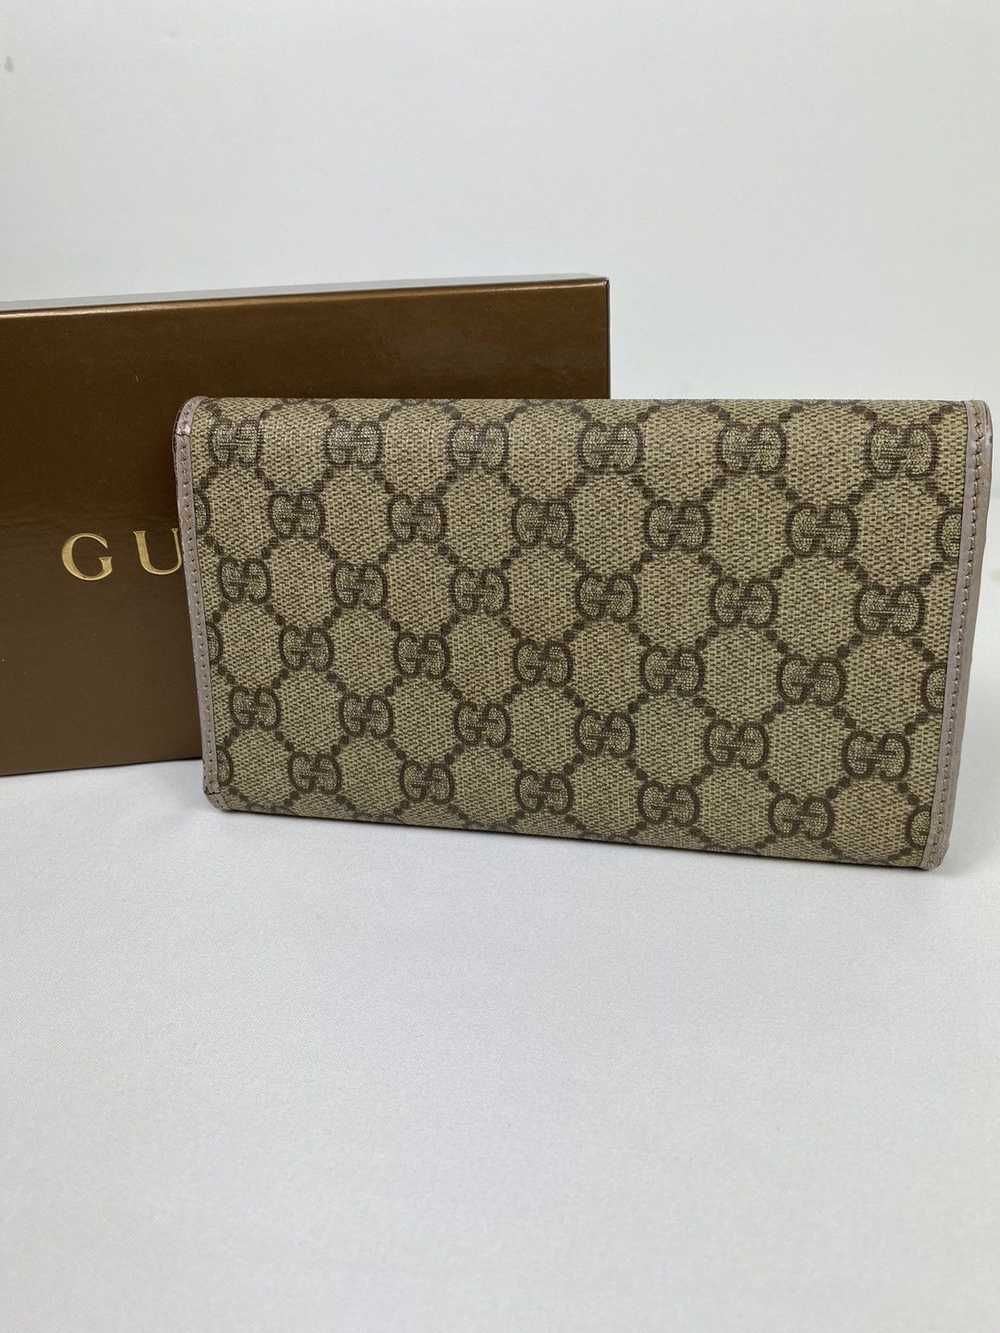 Gucci Gucci GG Guccissima leather trifold wallet - image 3